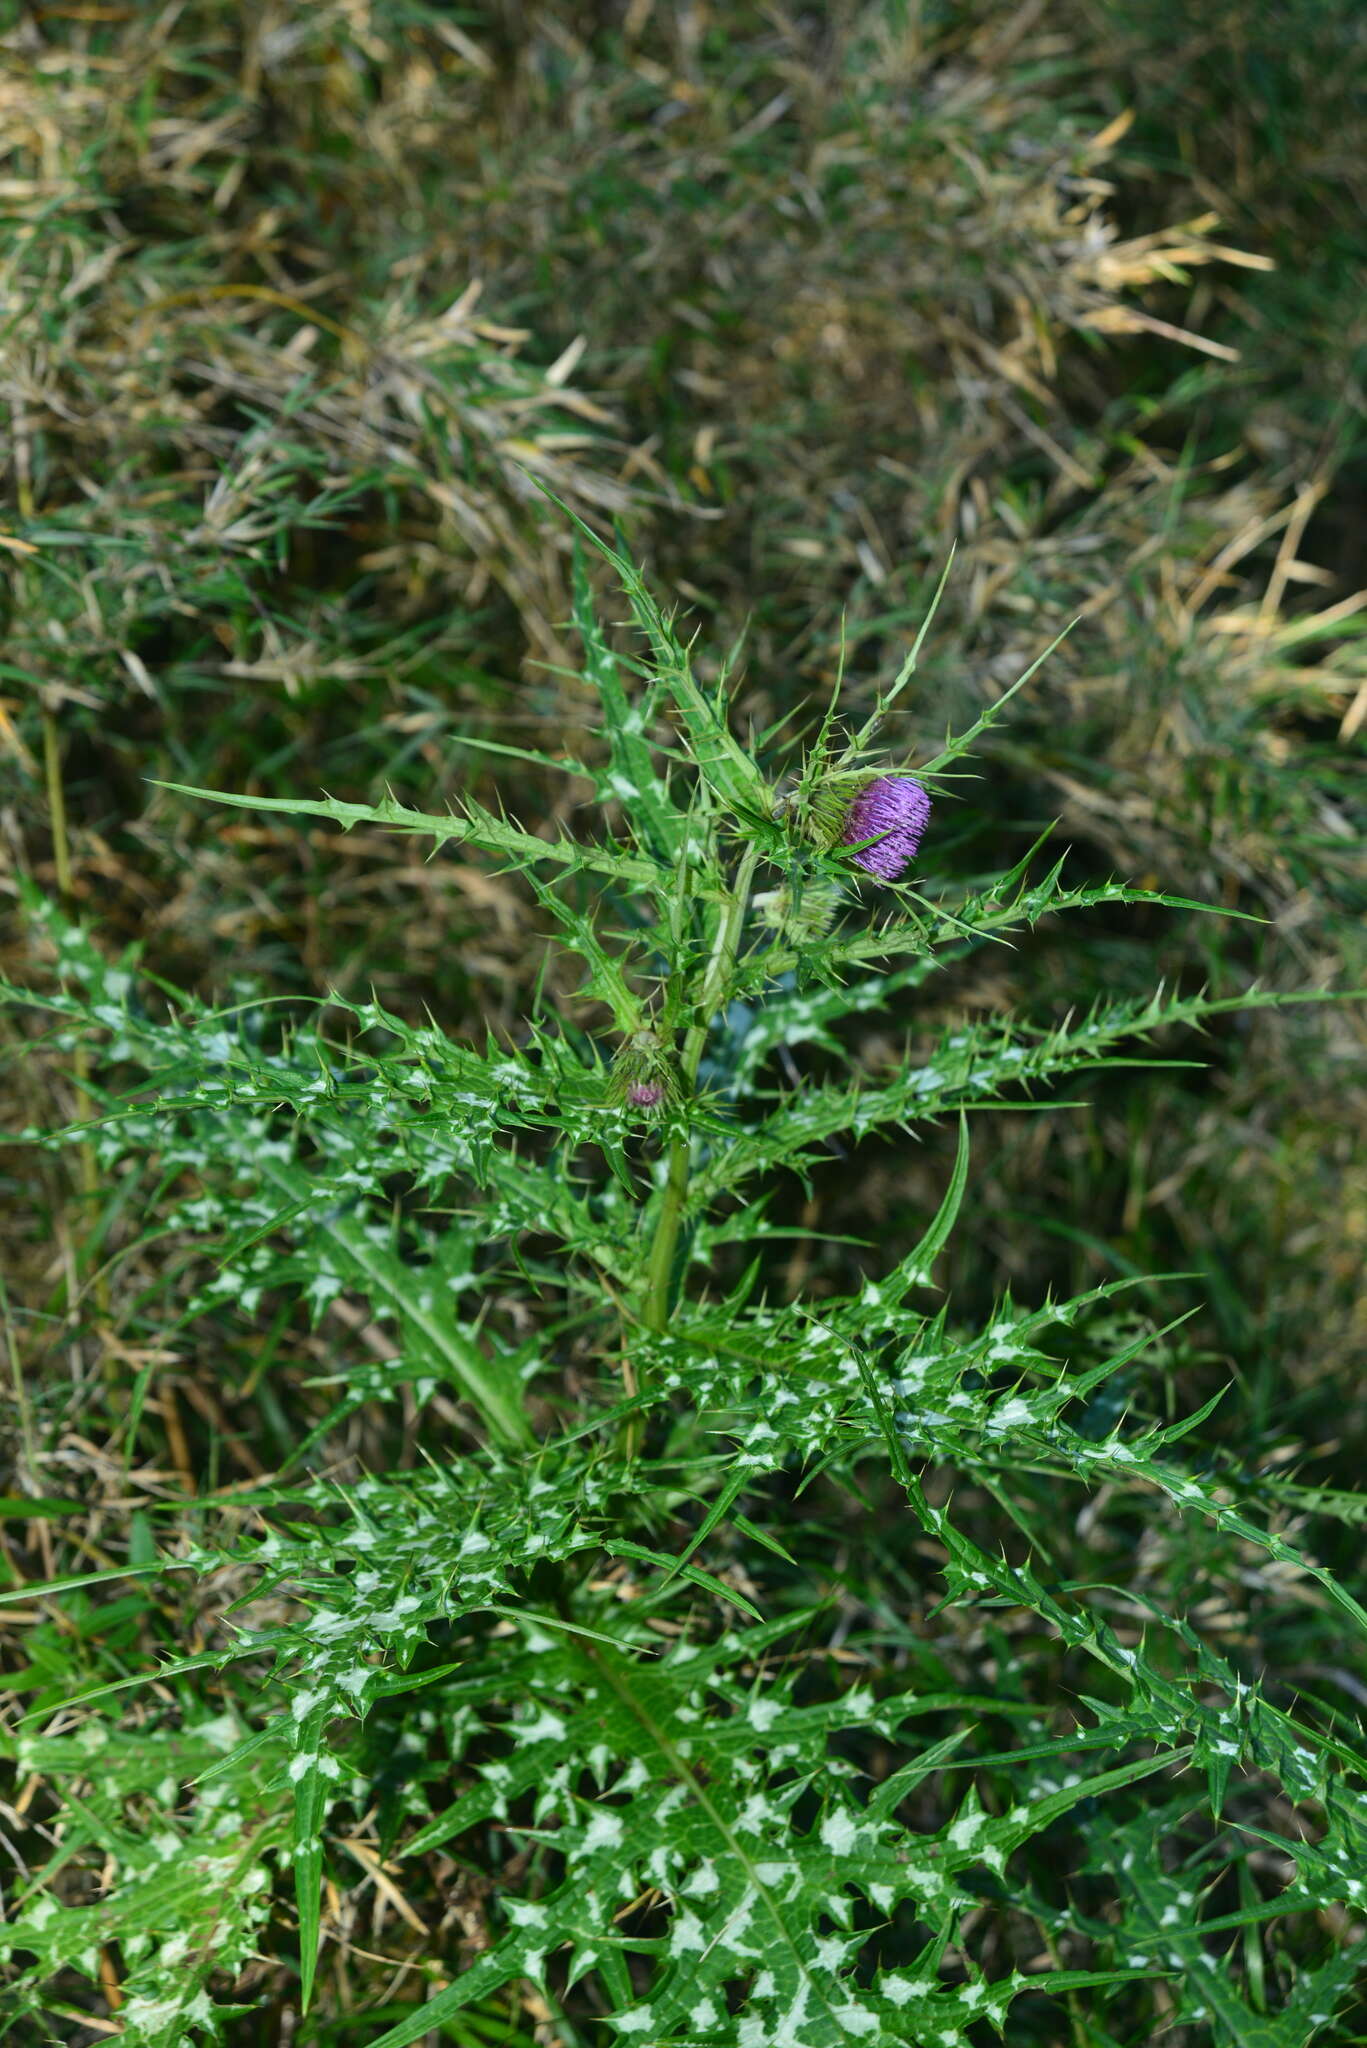 Image of <i>Cirsium tatakaense</i>